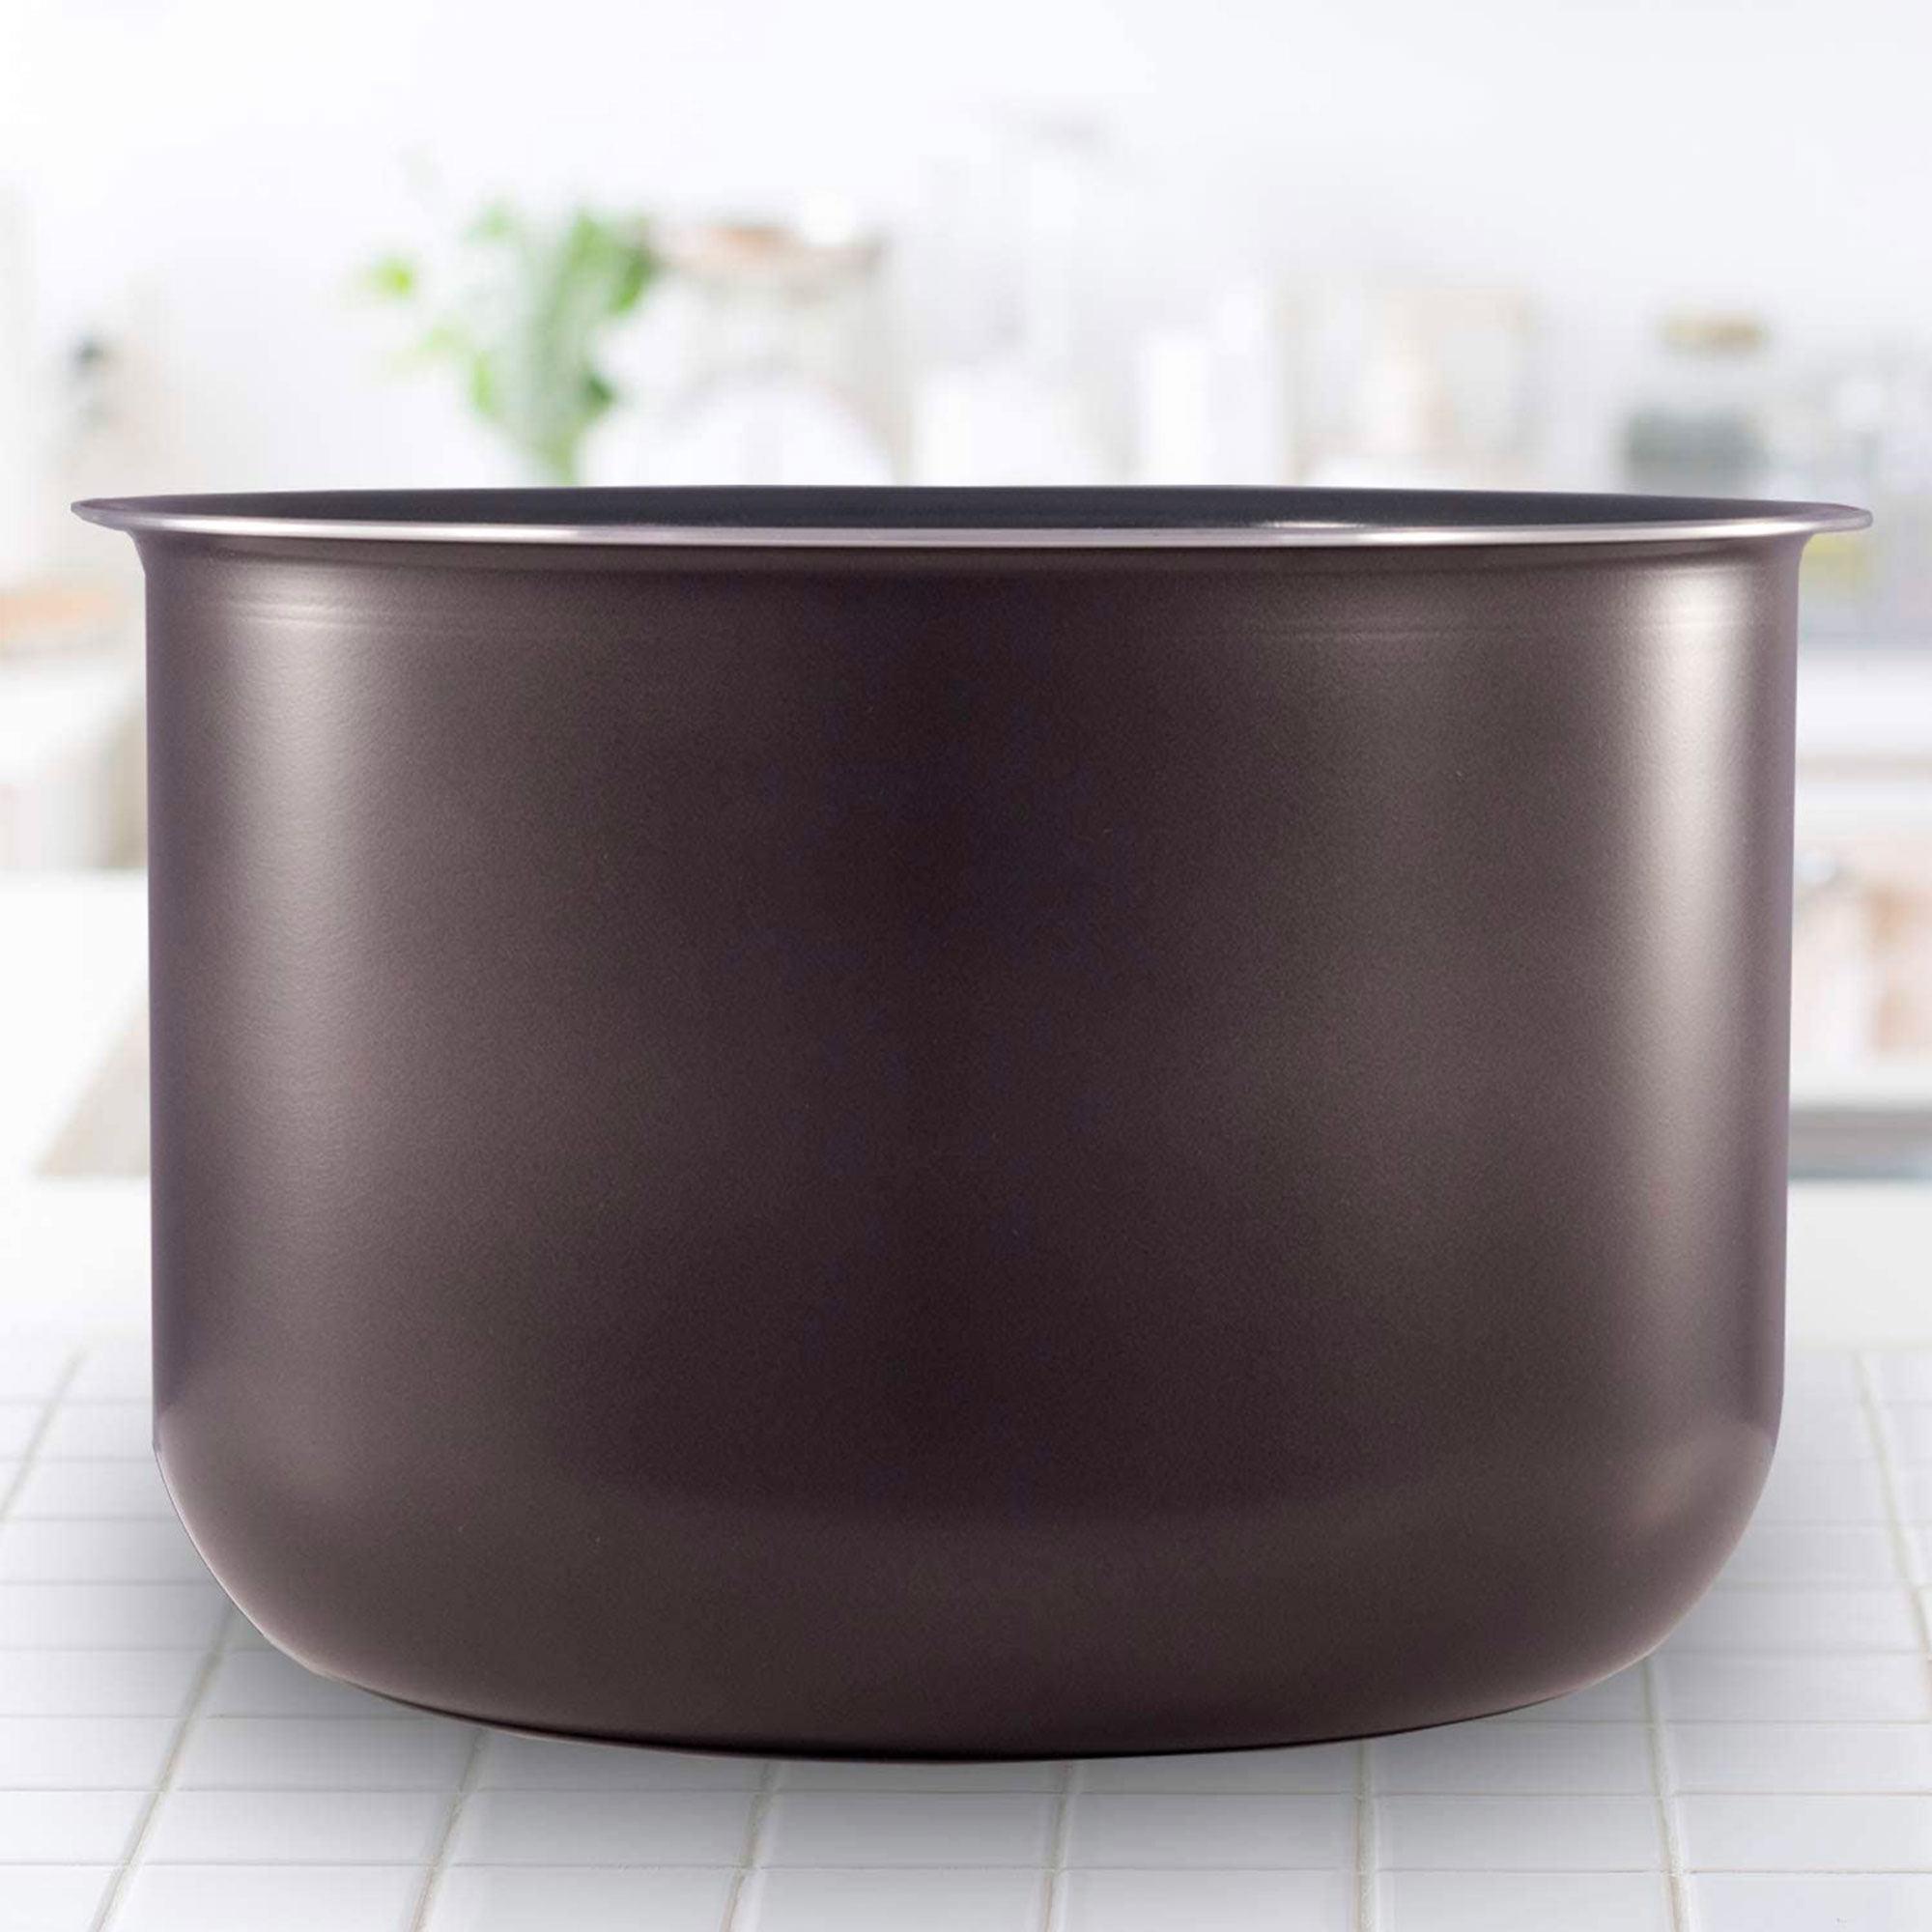 Instant Pot Ceramic Coated Inner Pot for 5.7L Models Image 2